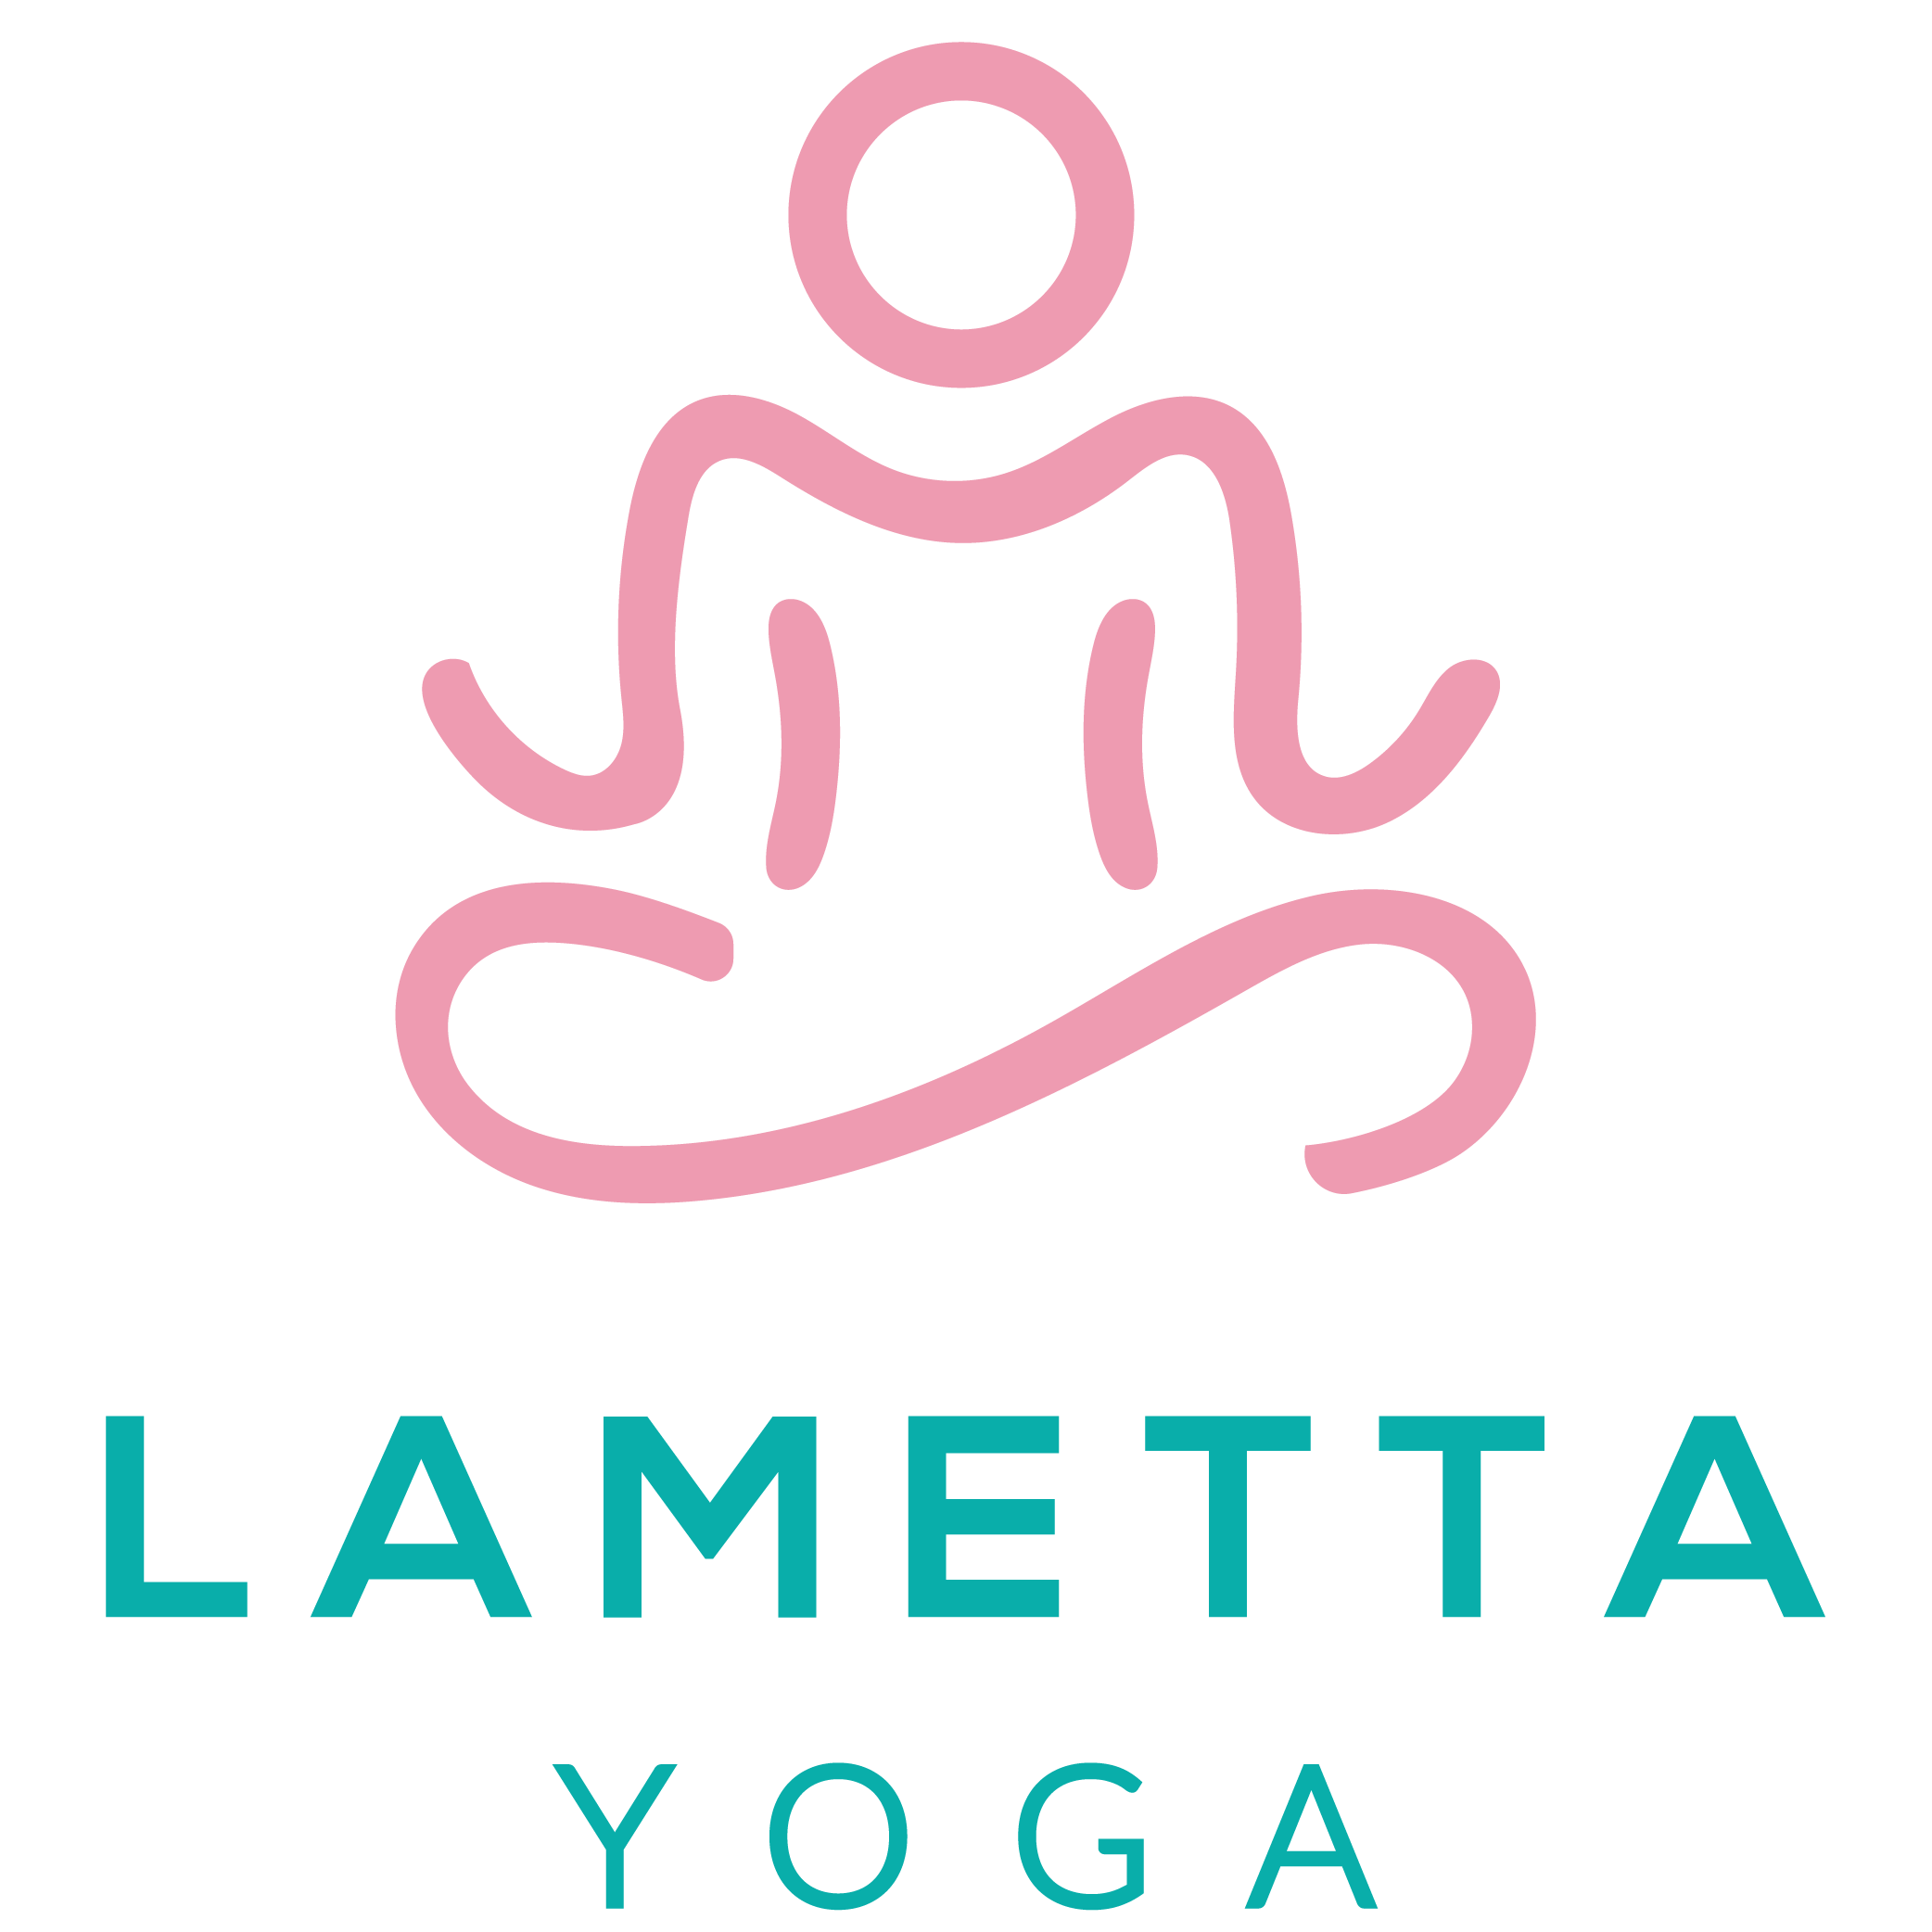 Lametta Yoga